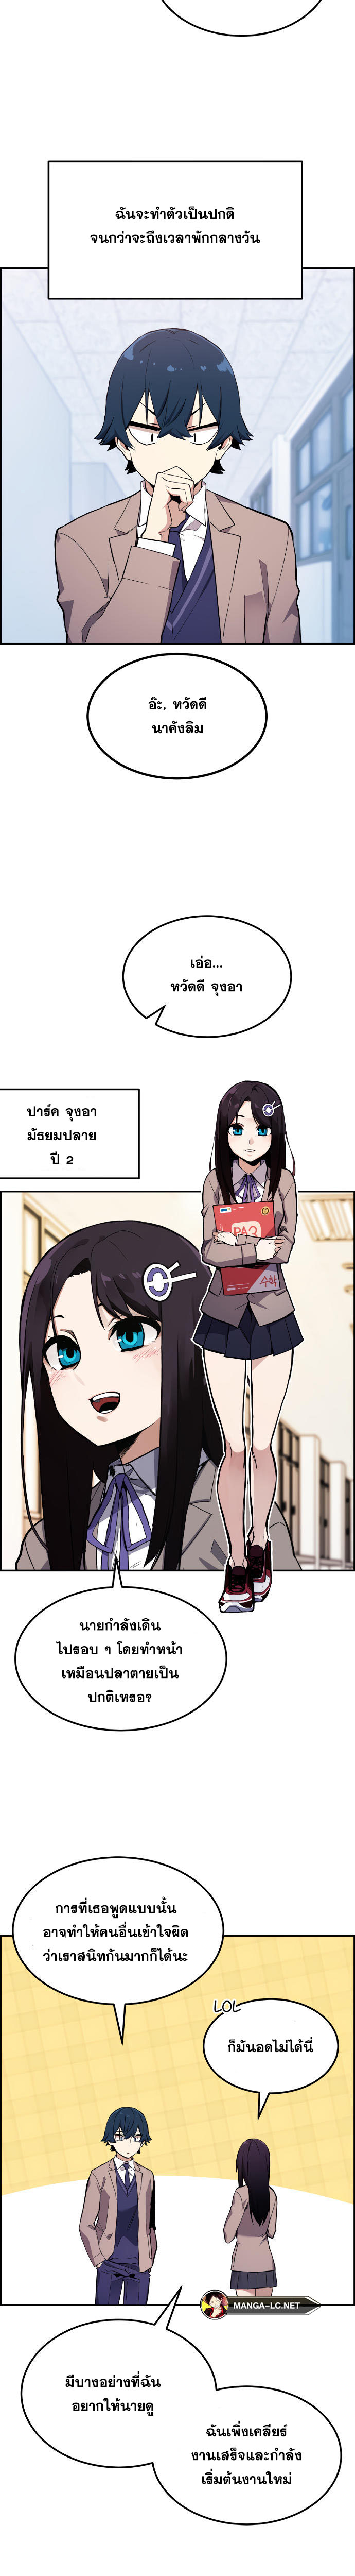 Webtoon Character Na Kang Lim ร ยธโ€ขร ยธยญร ยธโขร ยธโ€”ร ยธยตร ยนห 2 (20)